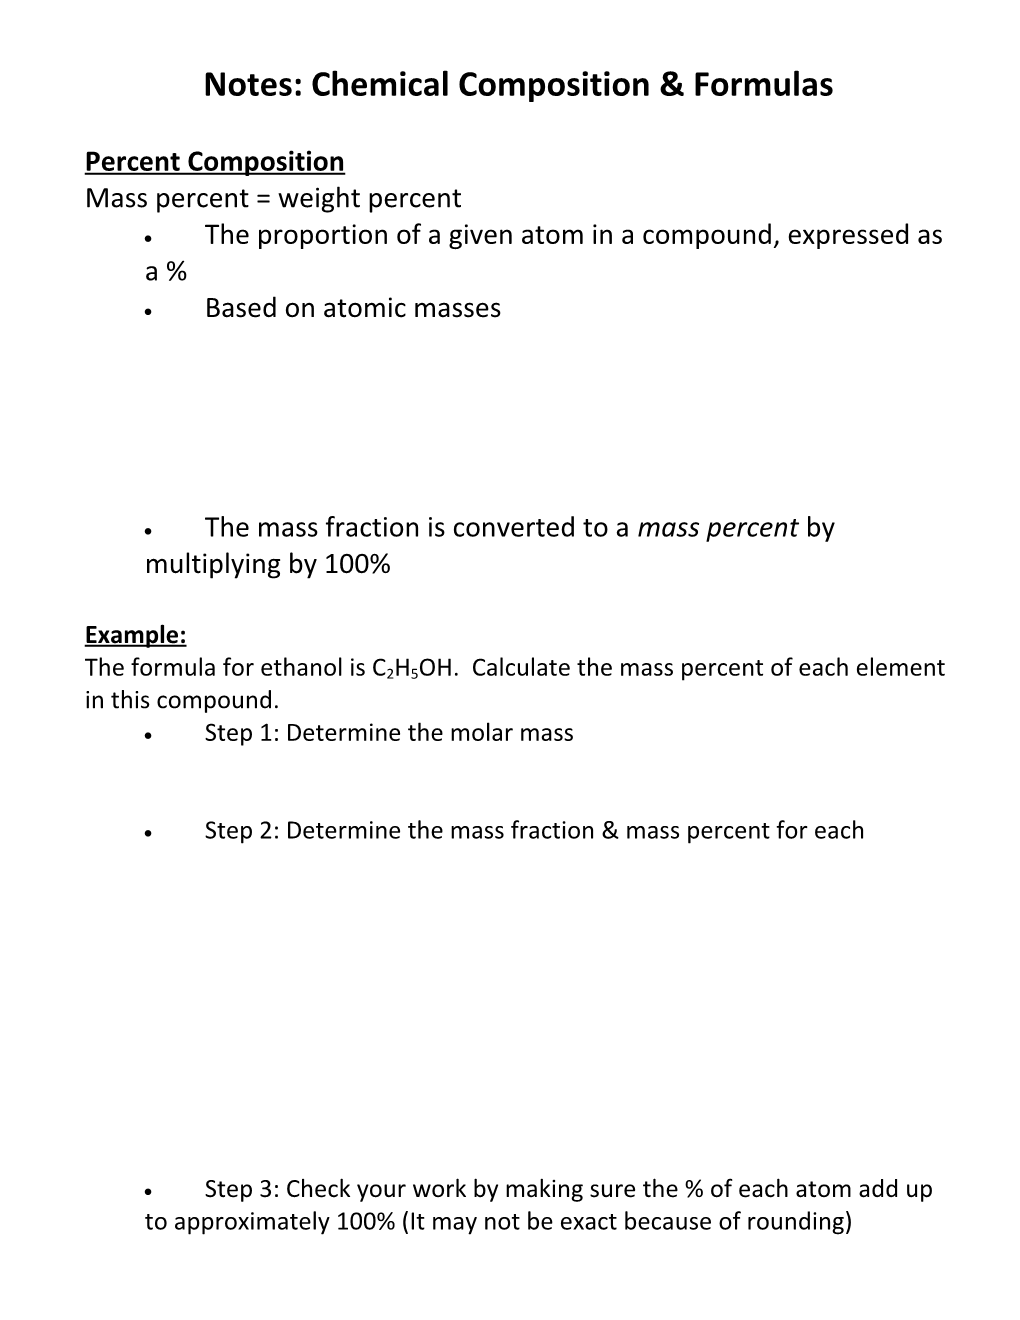 Notes: Chemical Composition & Formulas